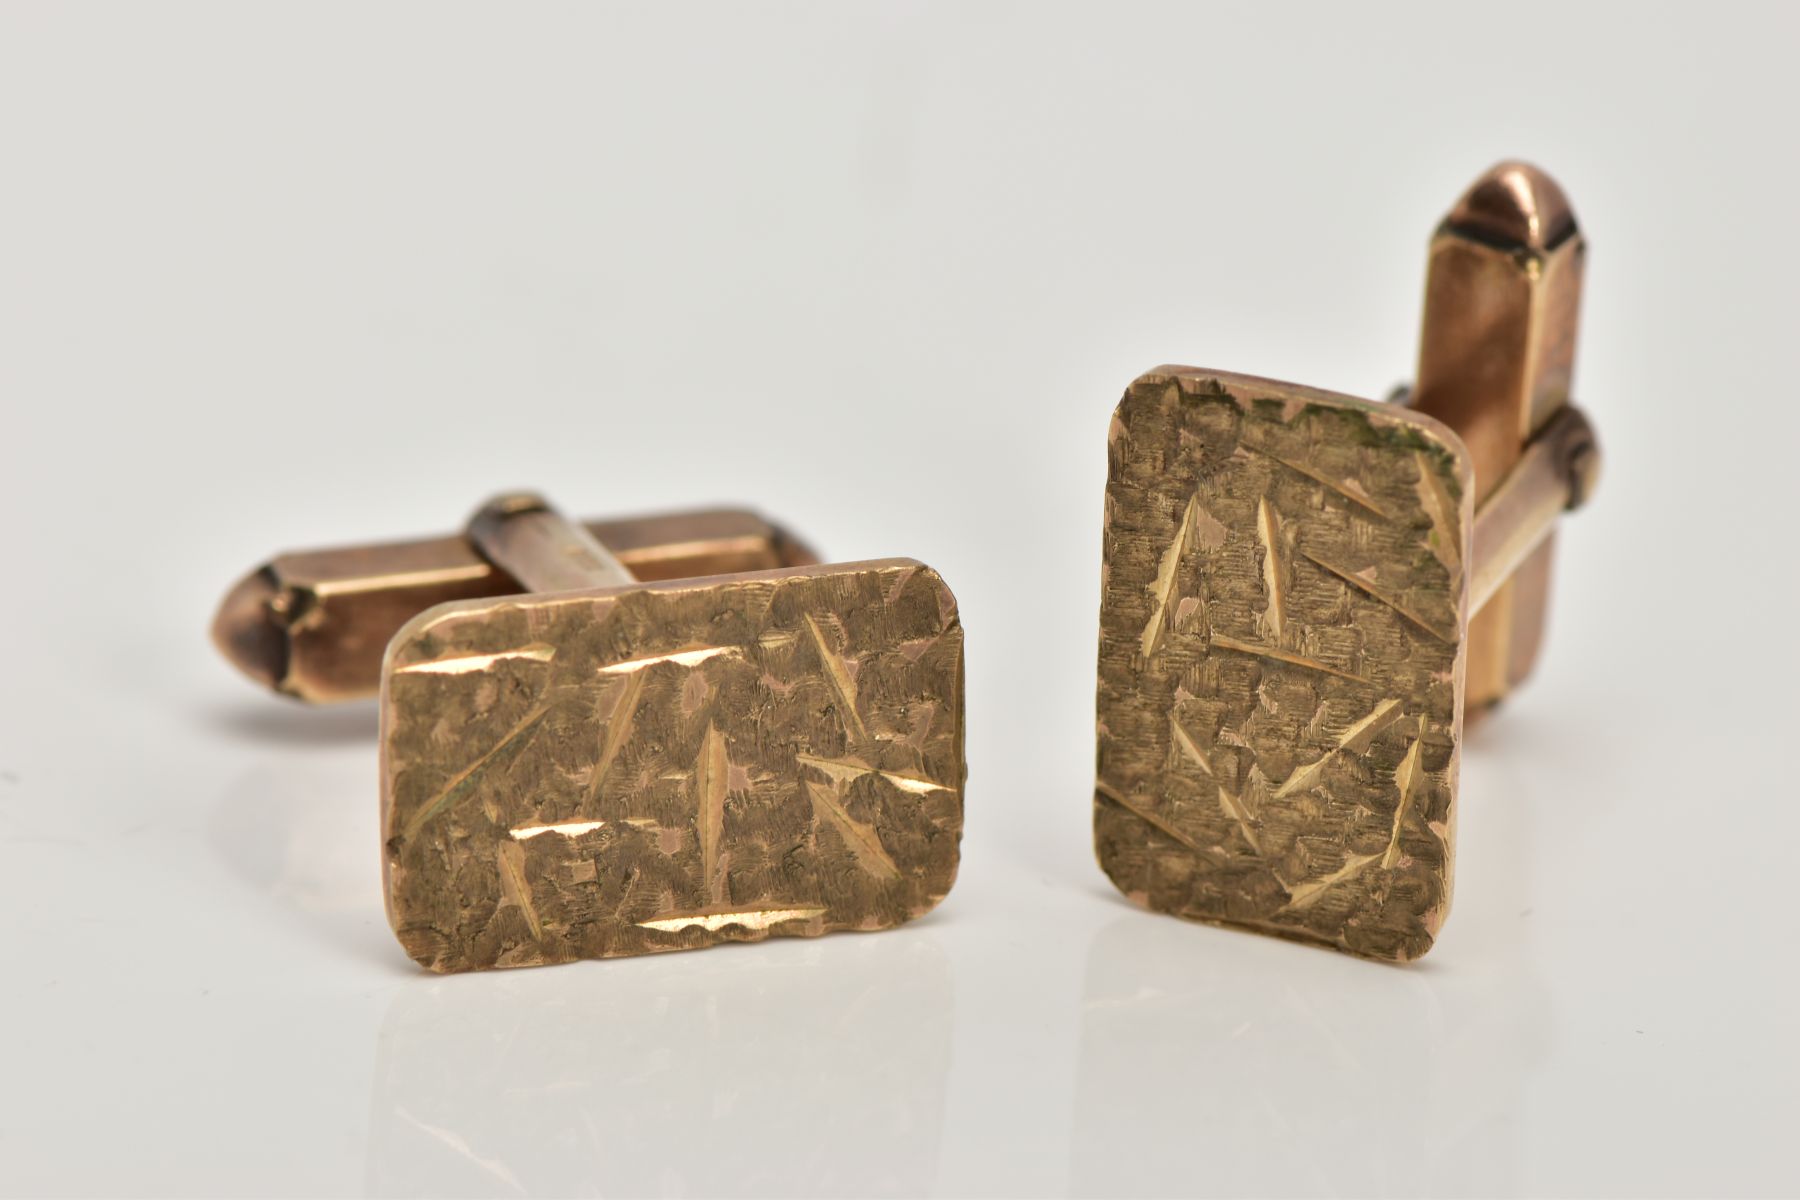 A PAIR OF 9CT GOLD CUFFLINKS, each of a rectangular textured design, hallmarked 9ct gold